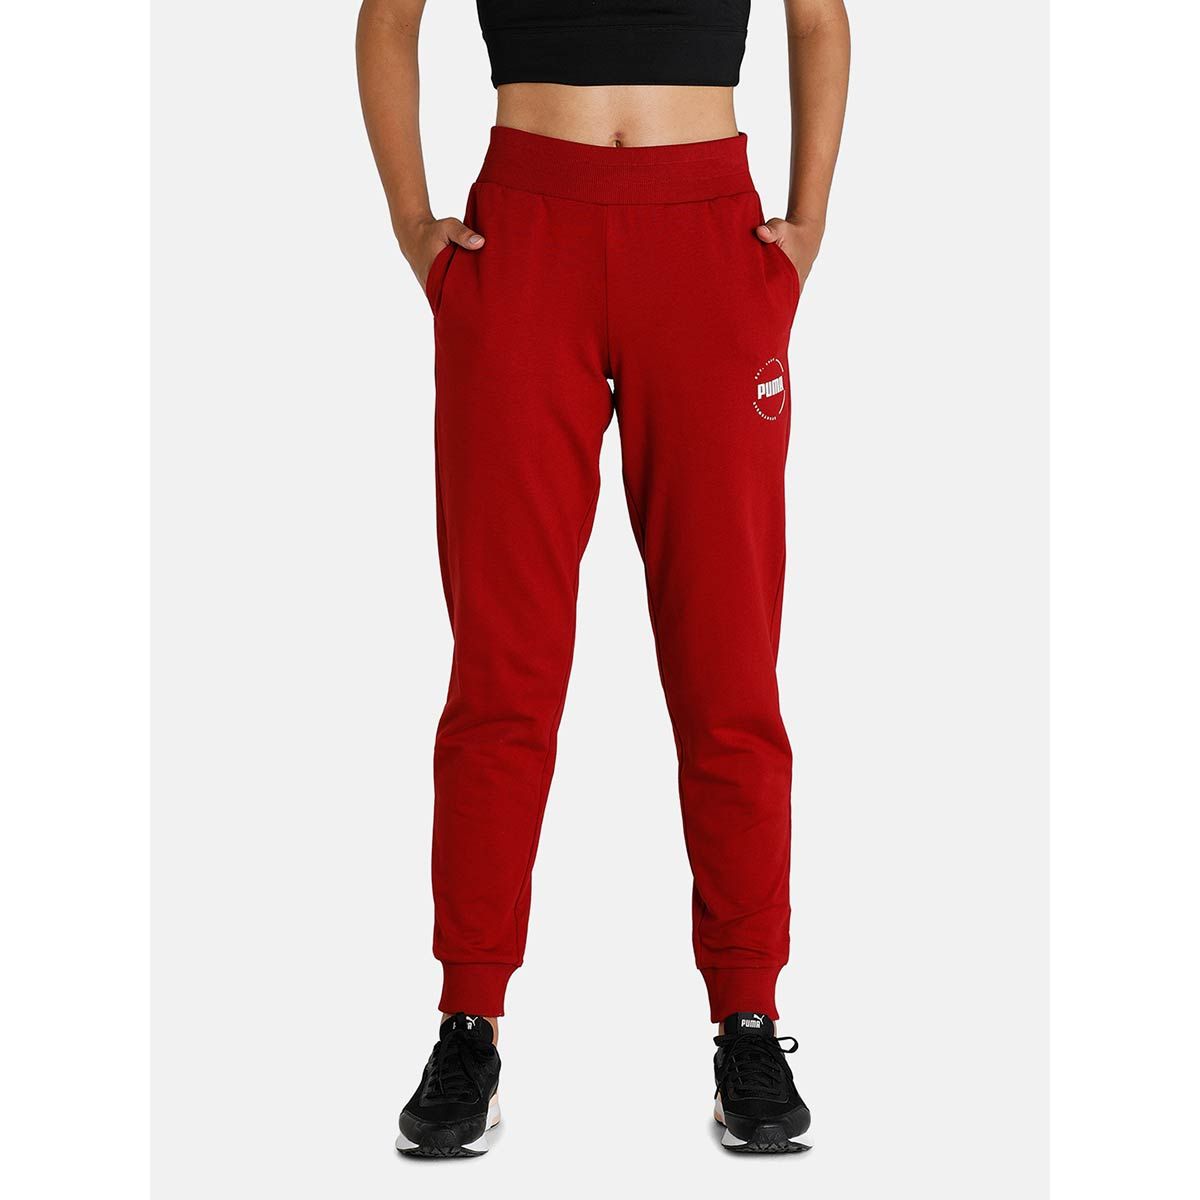 Buy Red Trousers  Pants for Women by KOTTY Online  Ajiocom